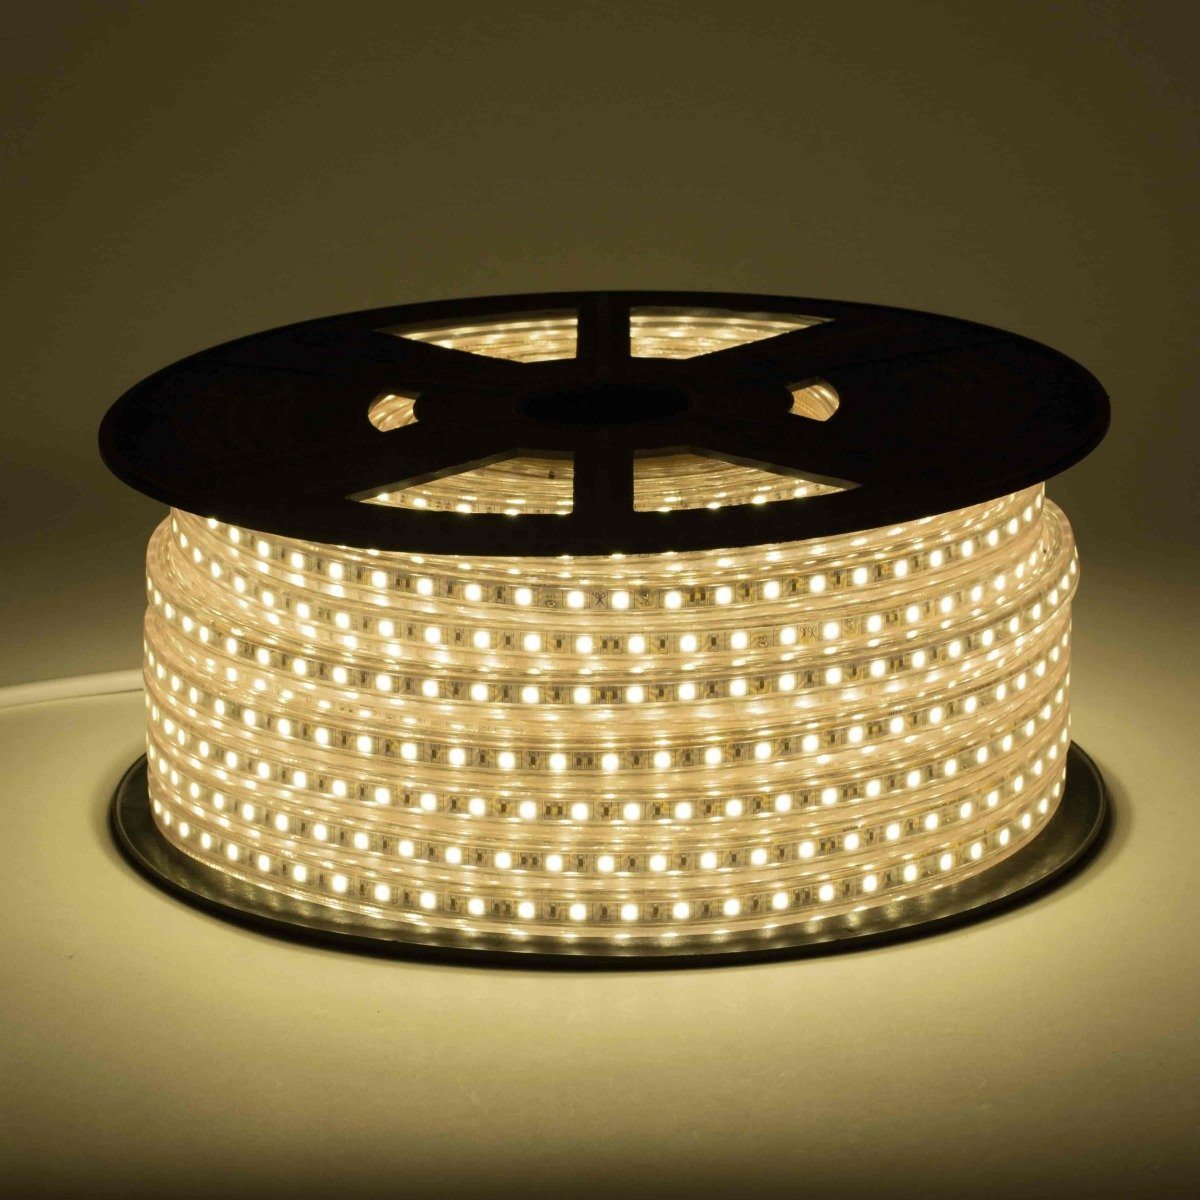 illuminated 120V led strip lights reel with visible chips in white 3000K